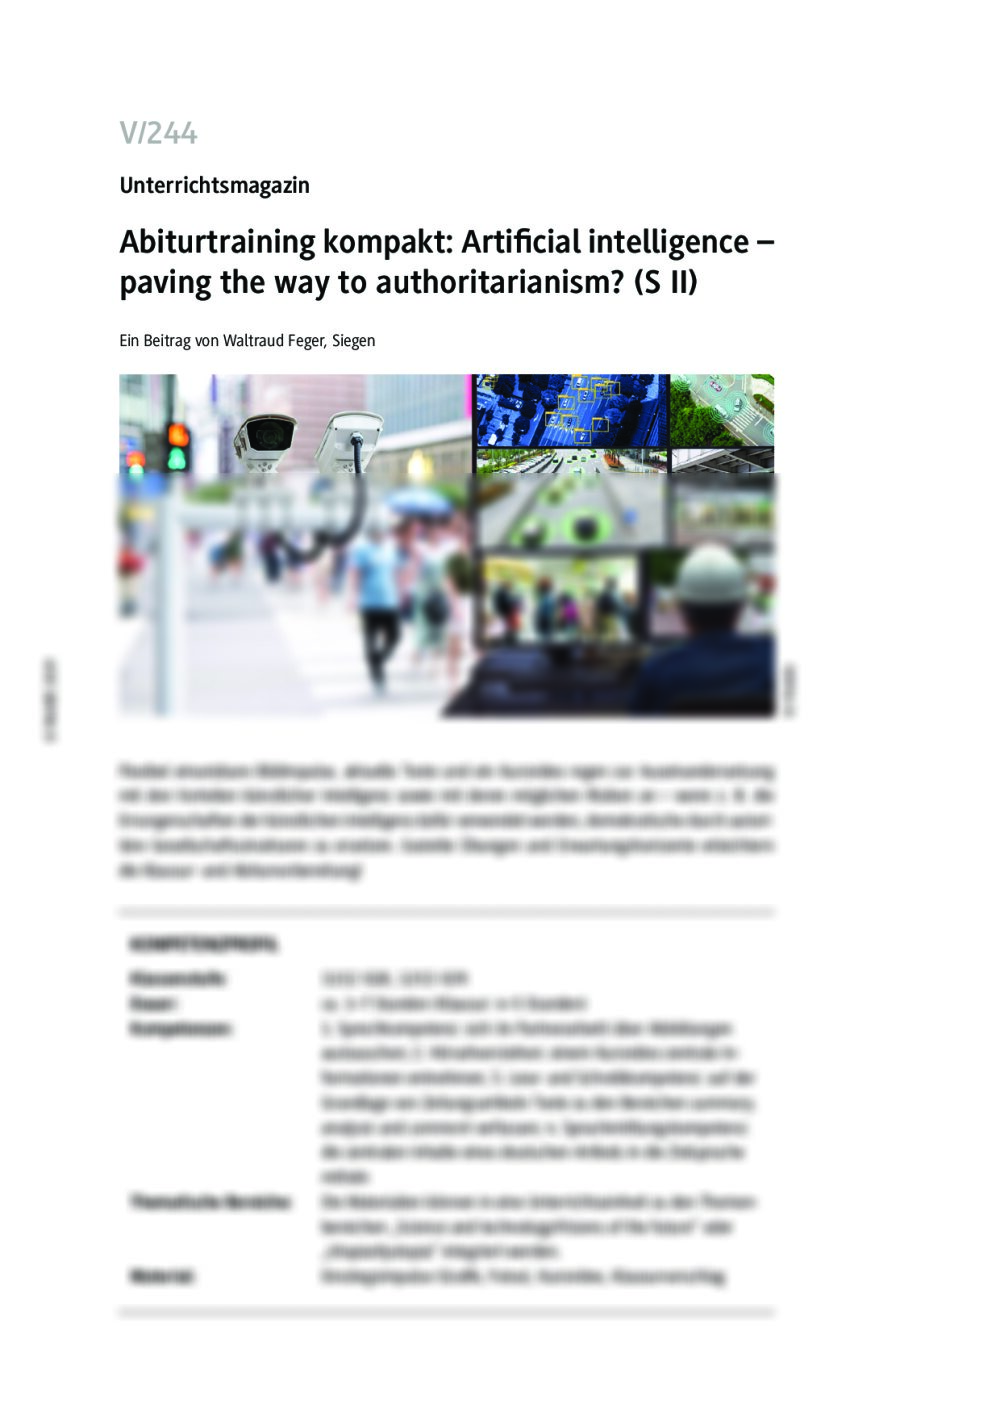 Abiturtraining kompakt: Artificial intelligence and authoritarianism - Seite 1